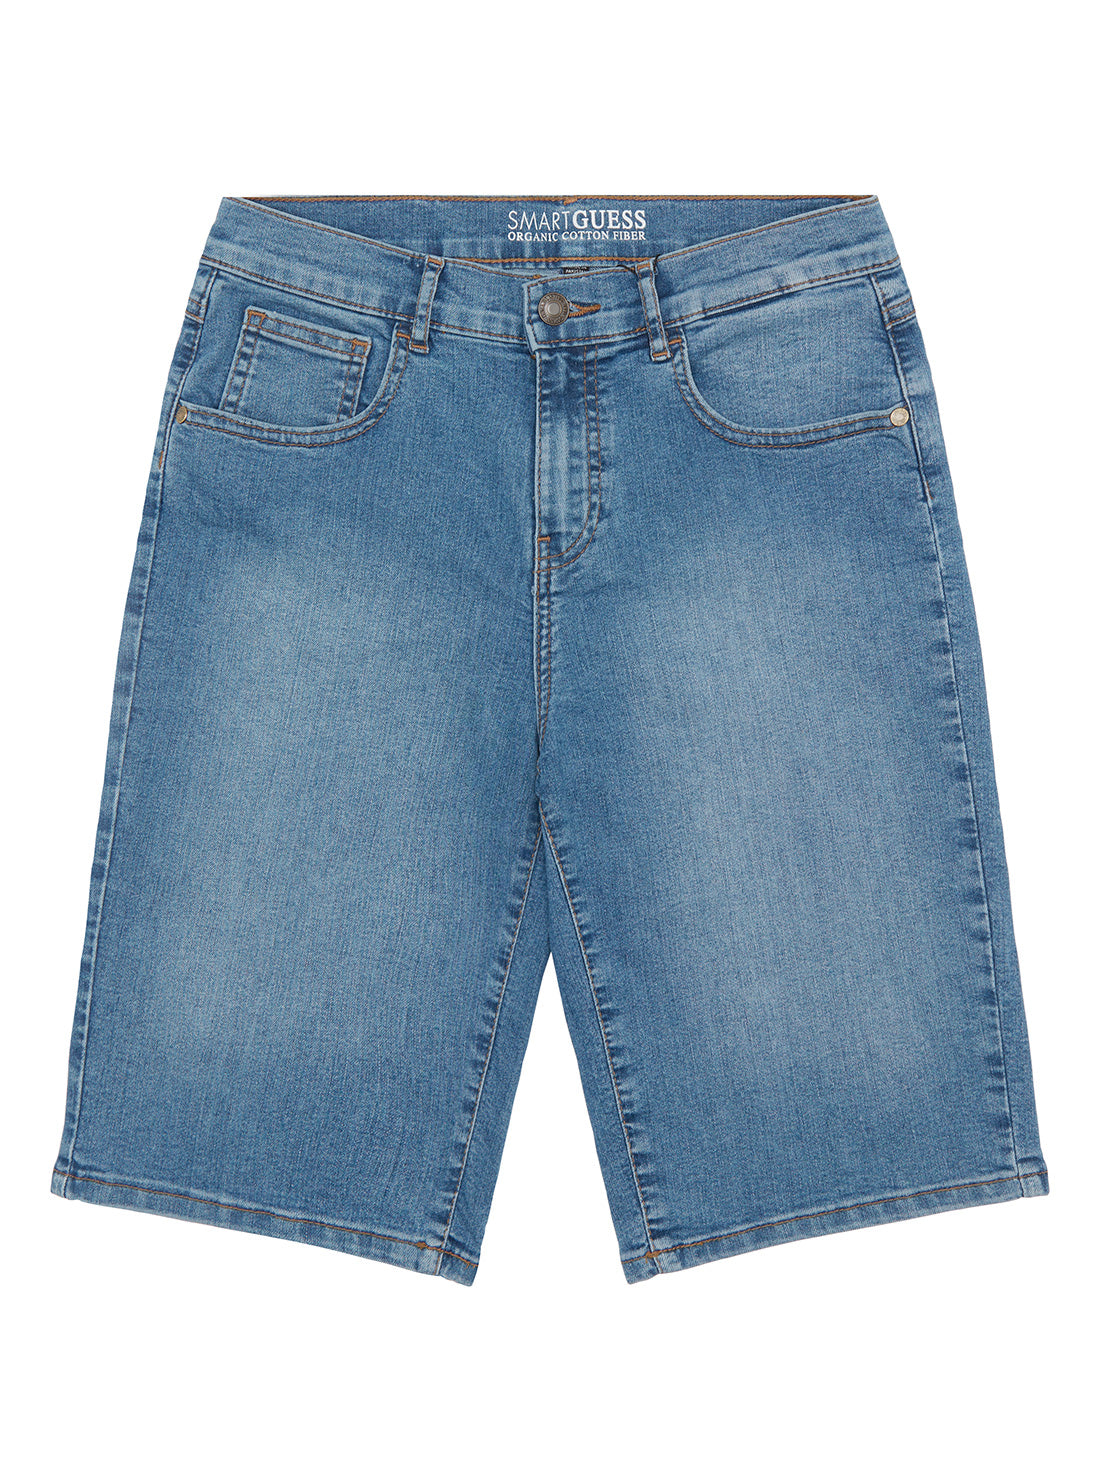 Super Bright Blue Wash Denim Shorts (7-16)